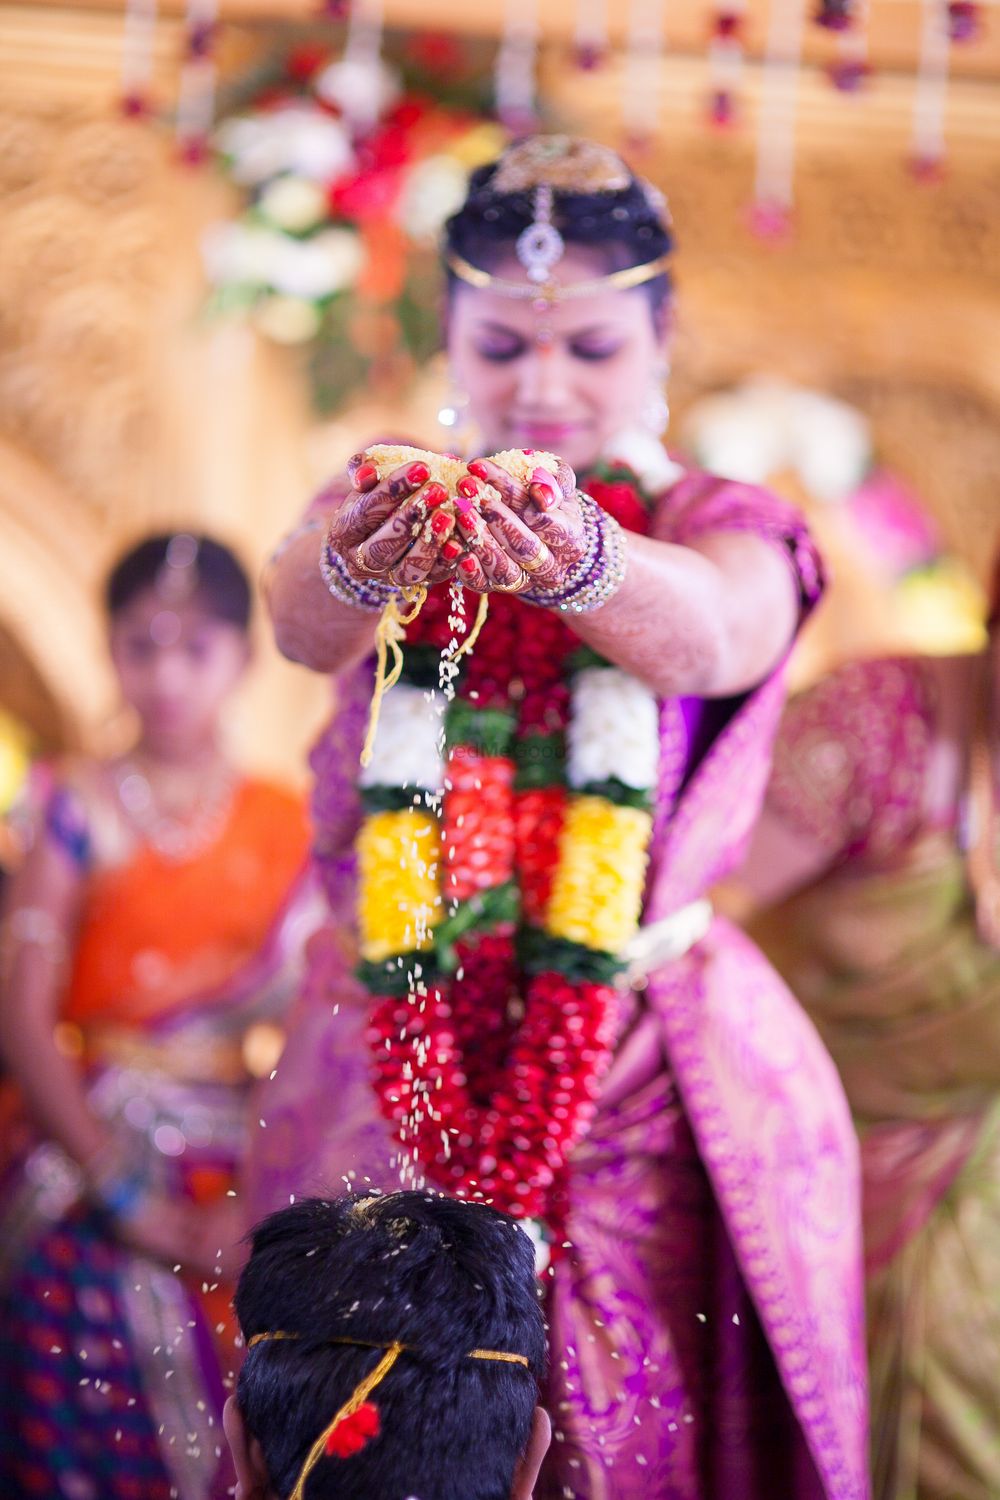 Photo From Wedding Ceremonies - By Photo Brahma